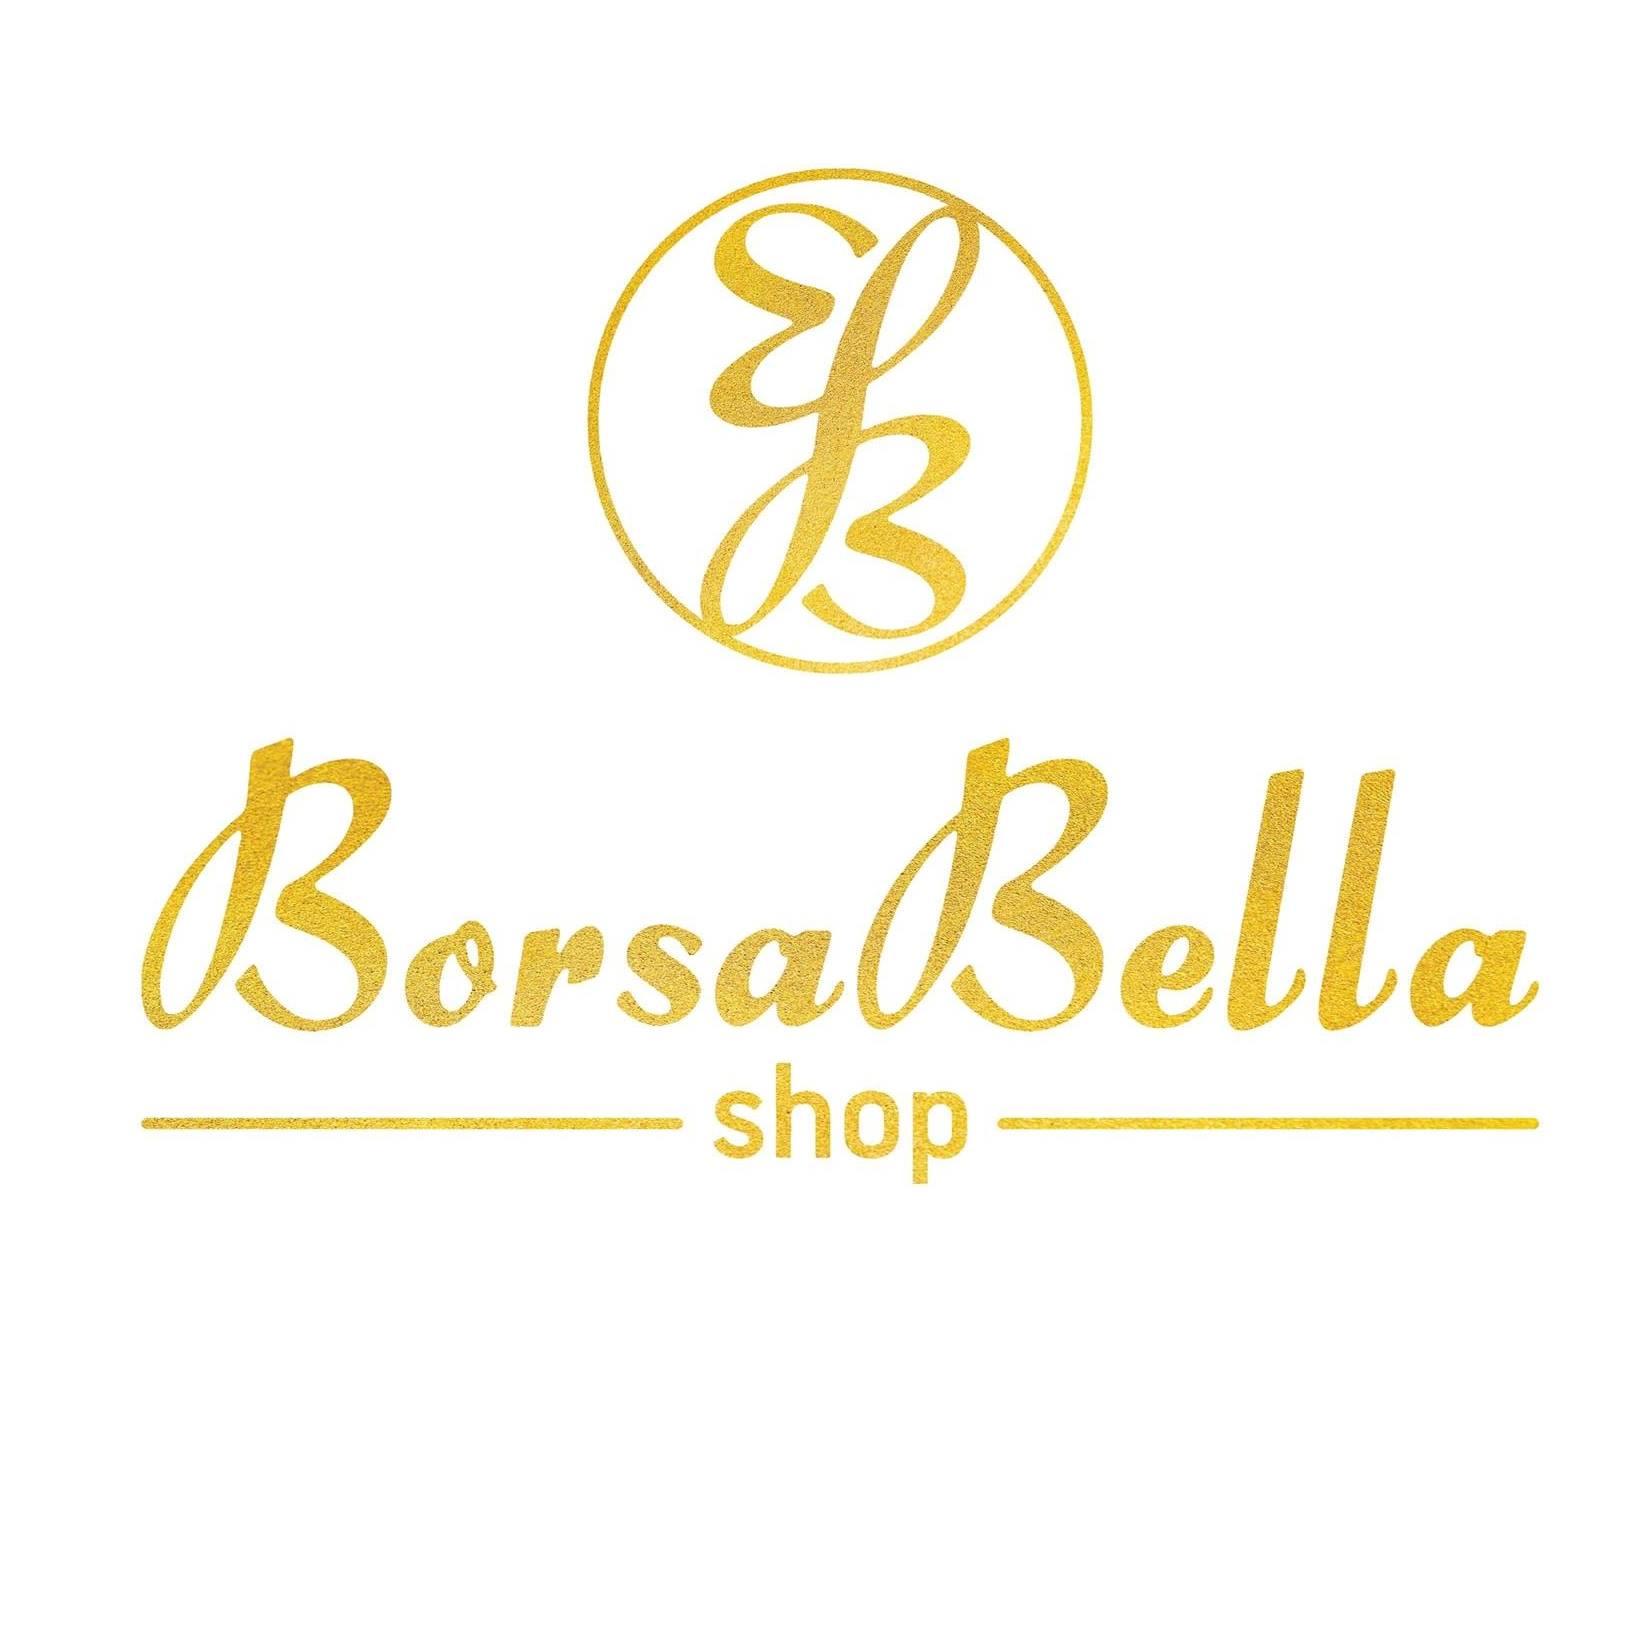 BorsaBella